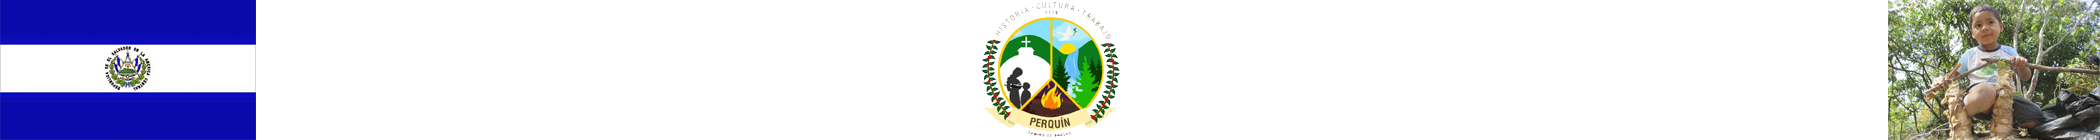 Banner Perquin